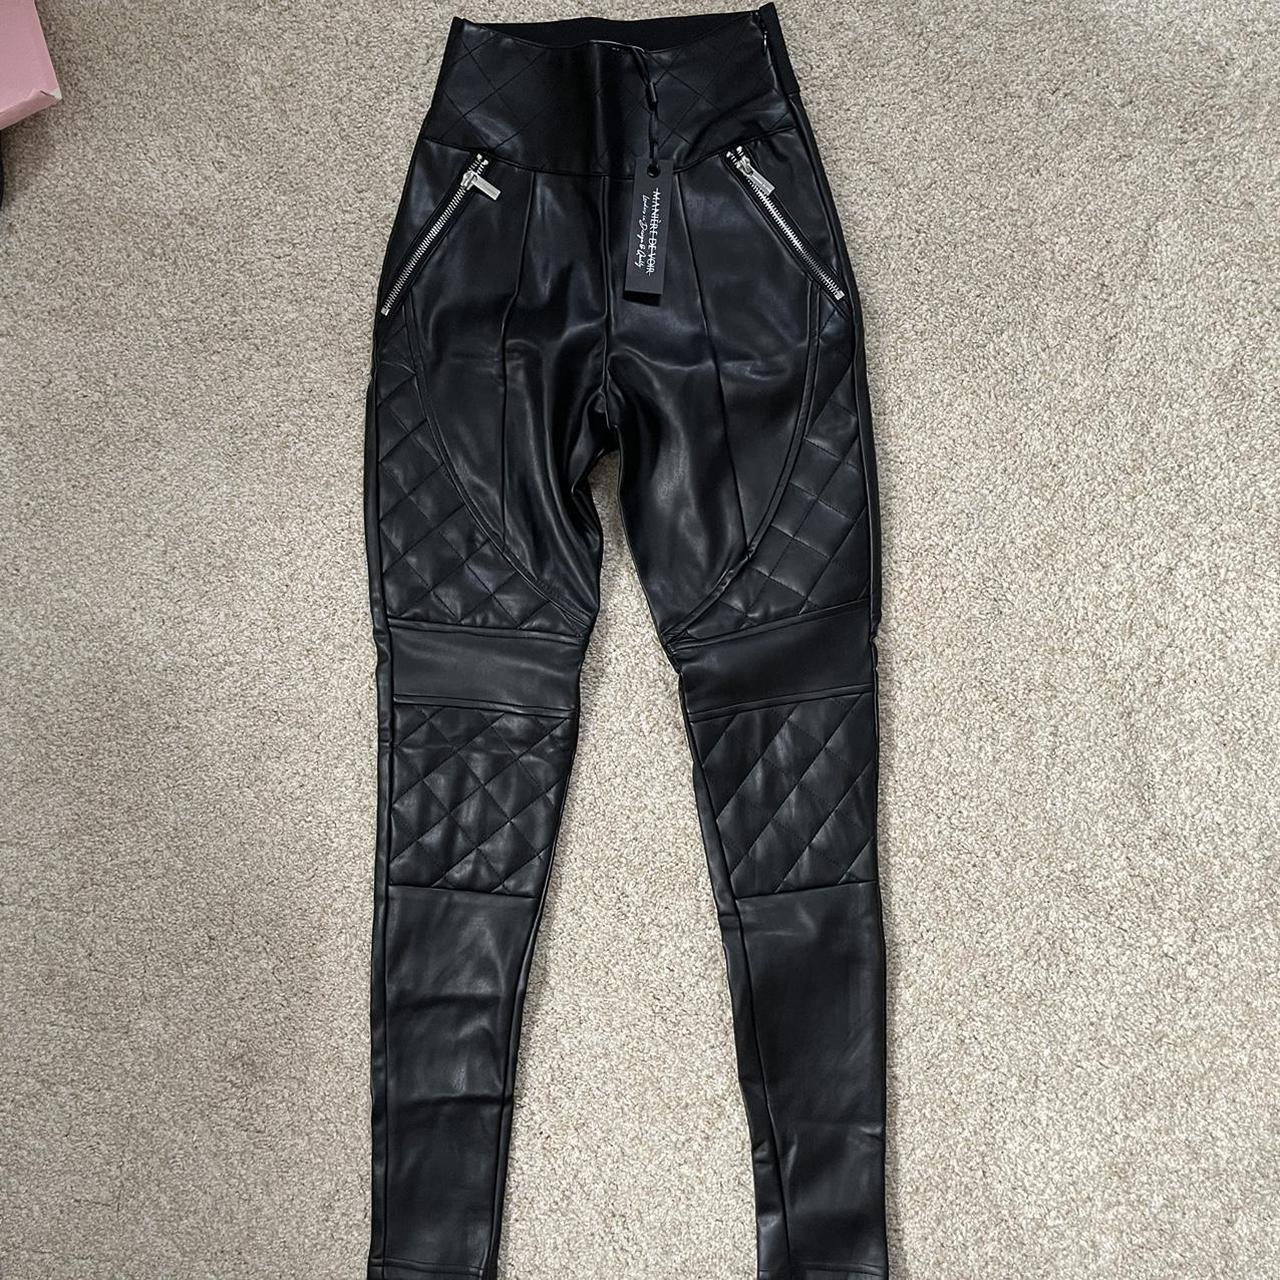 Maniere de vior leather legging pants//brand new I... - Depop